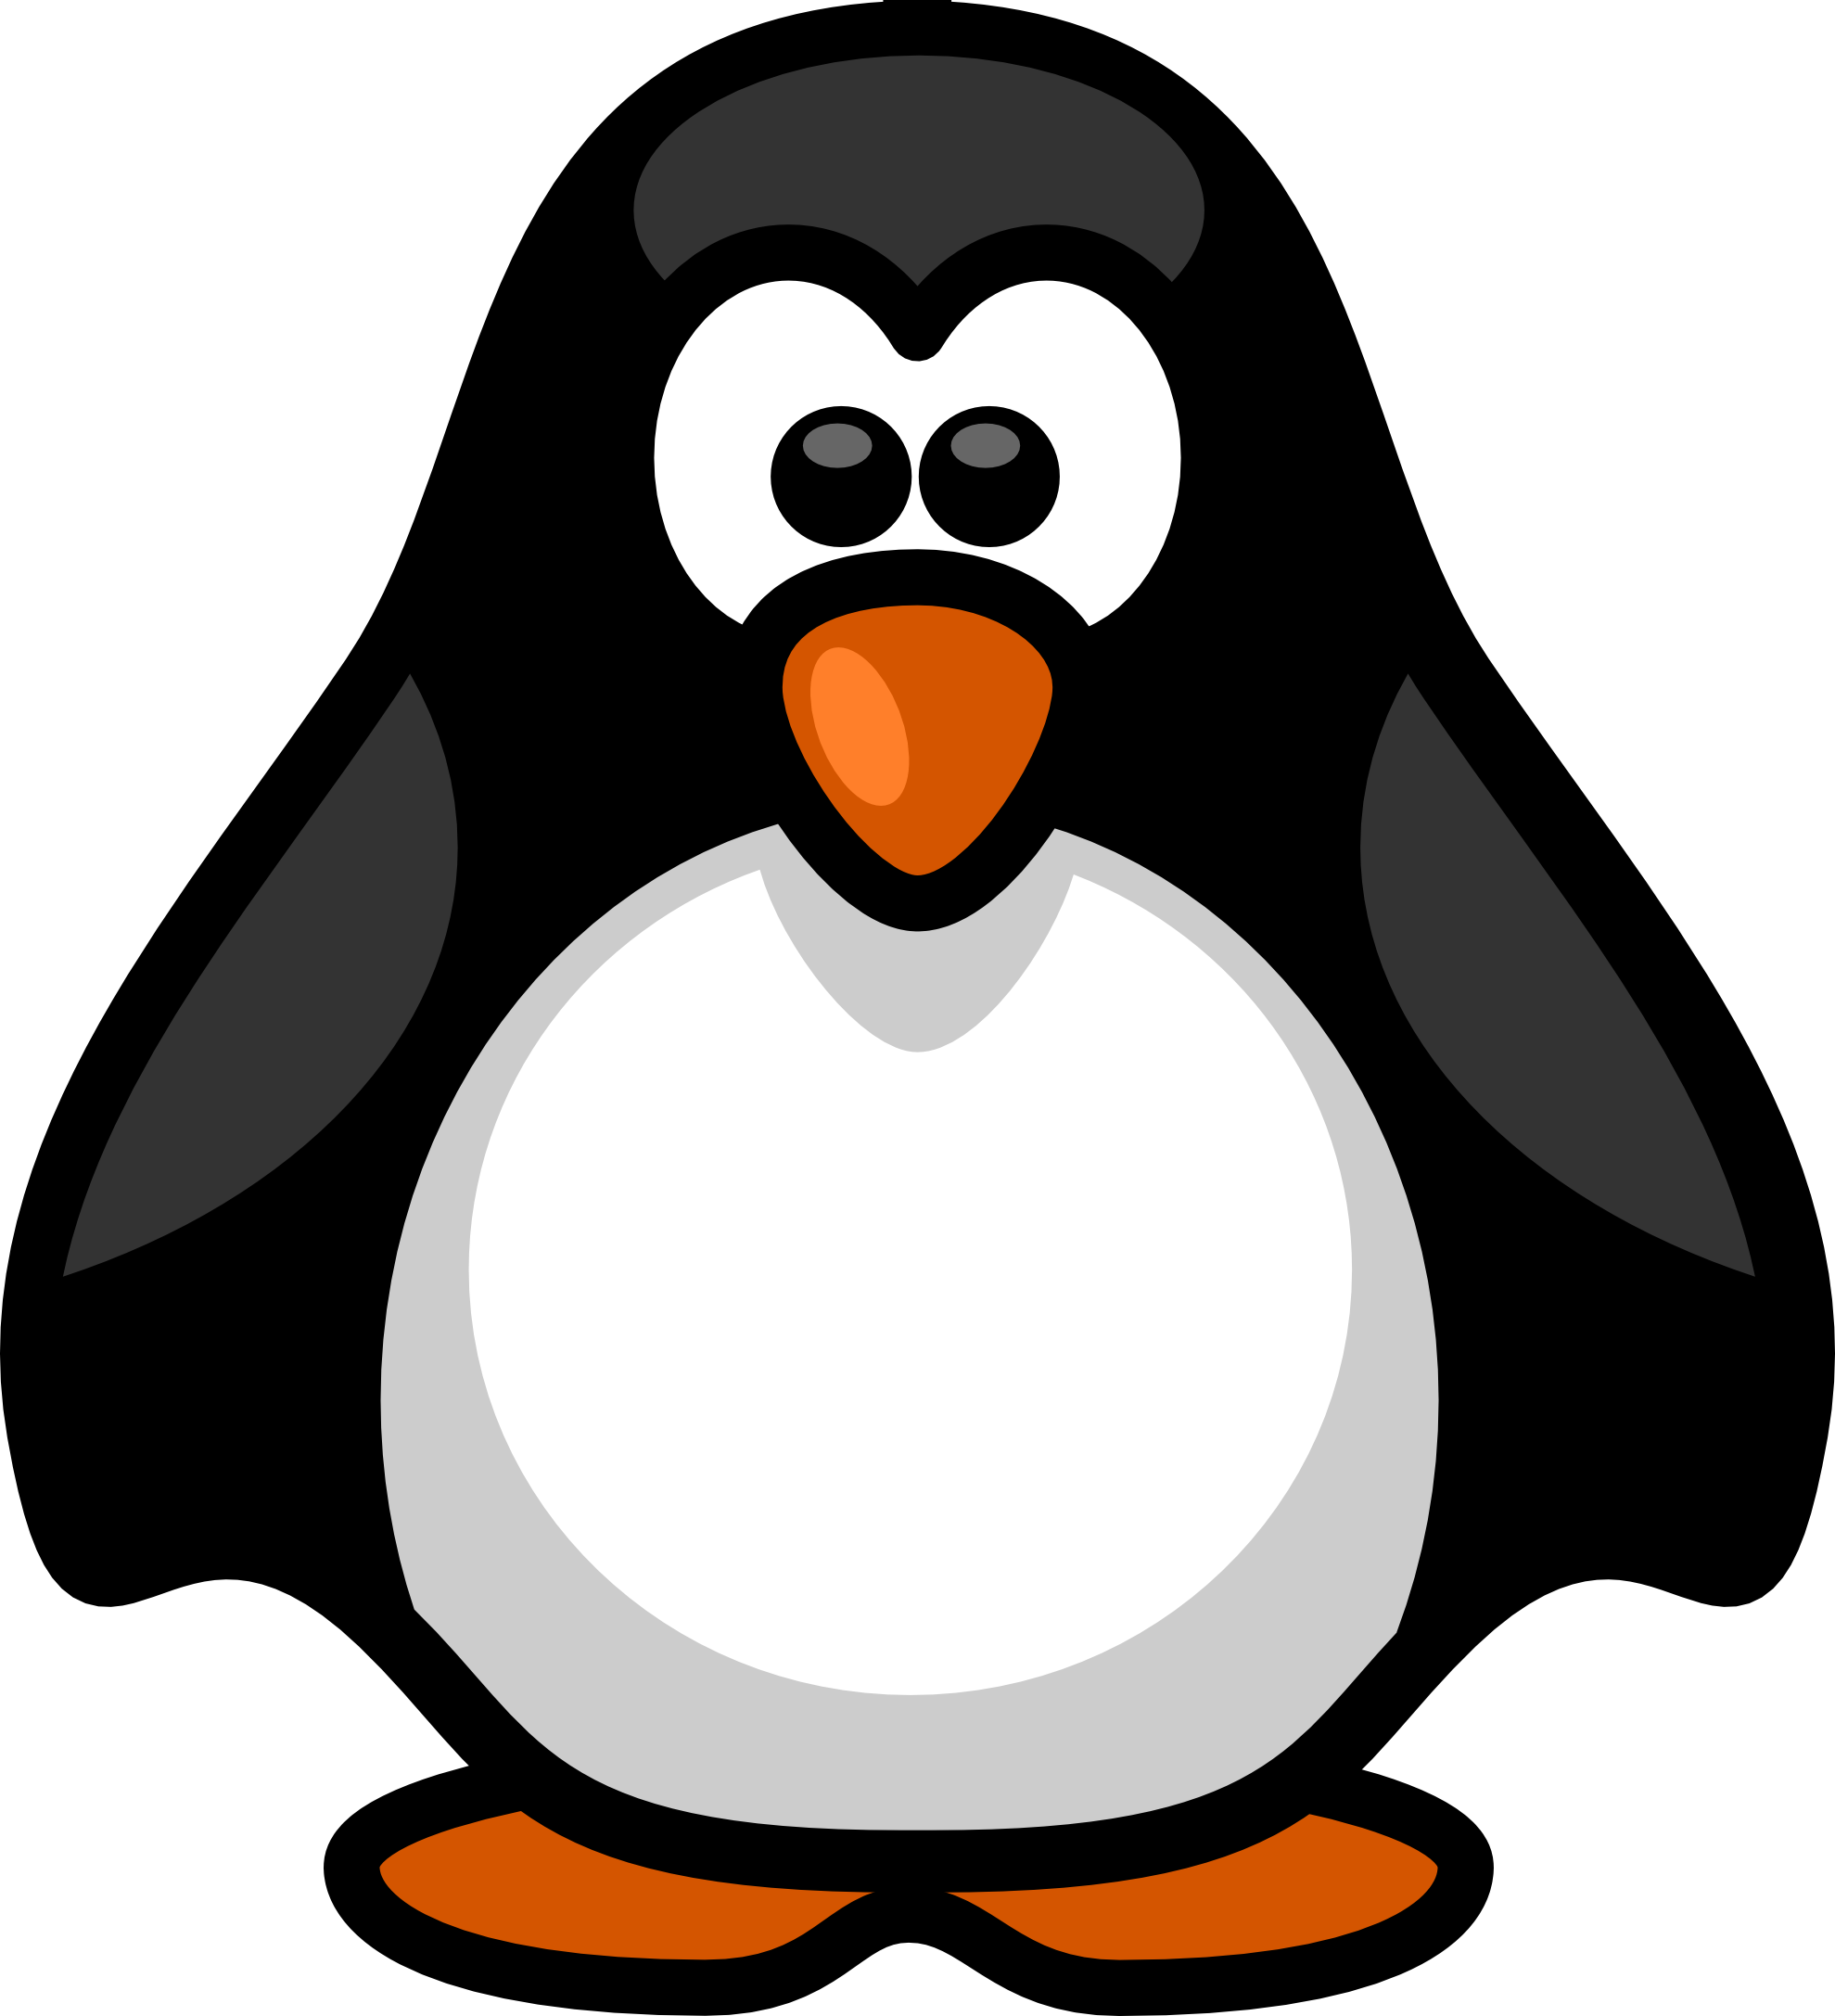 Penguin clip art.